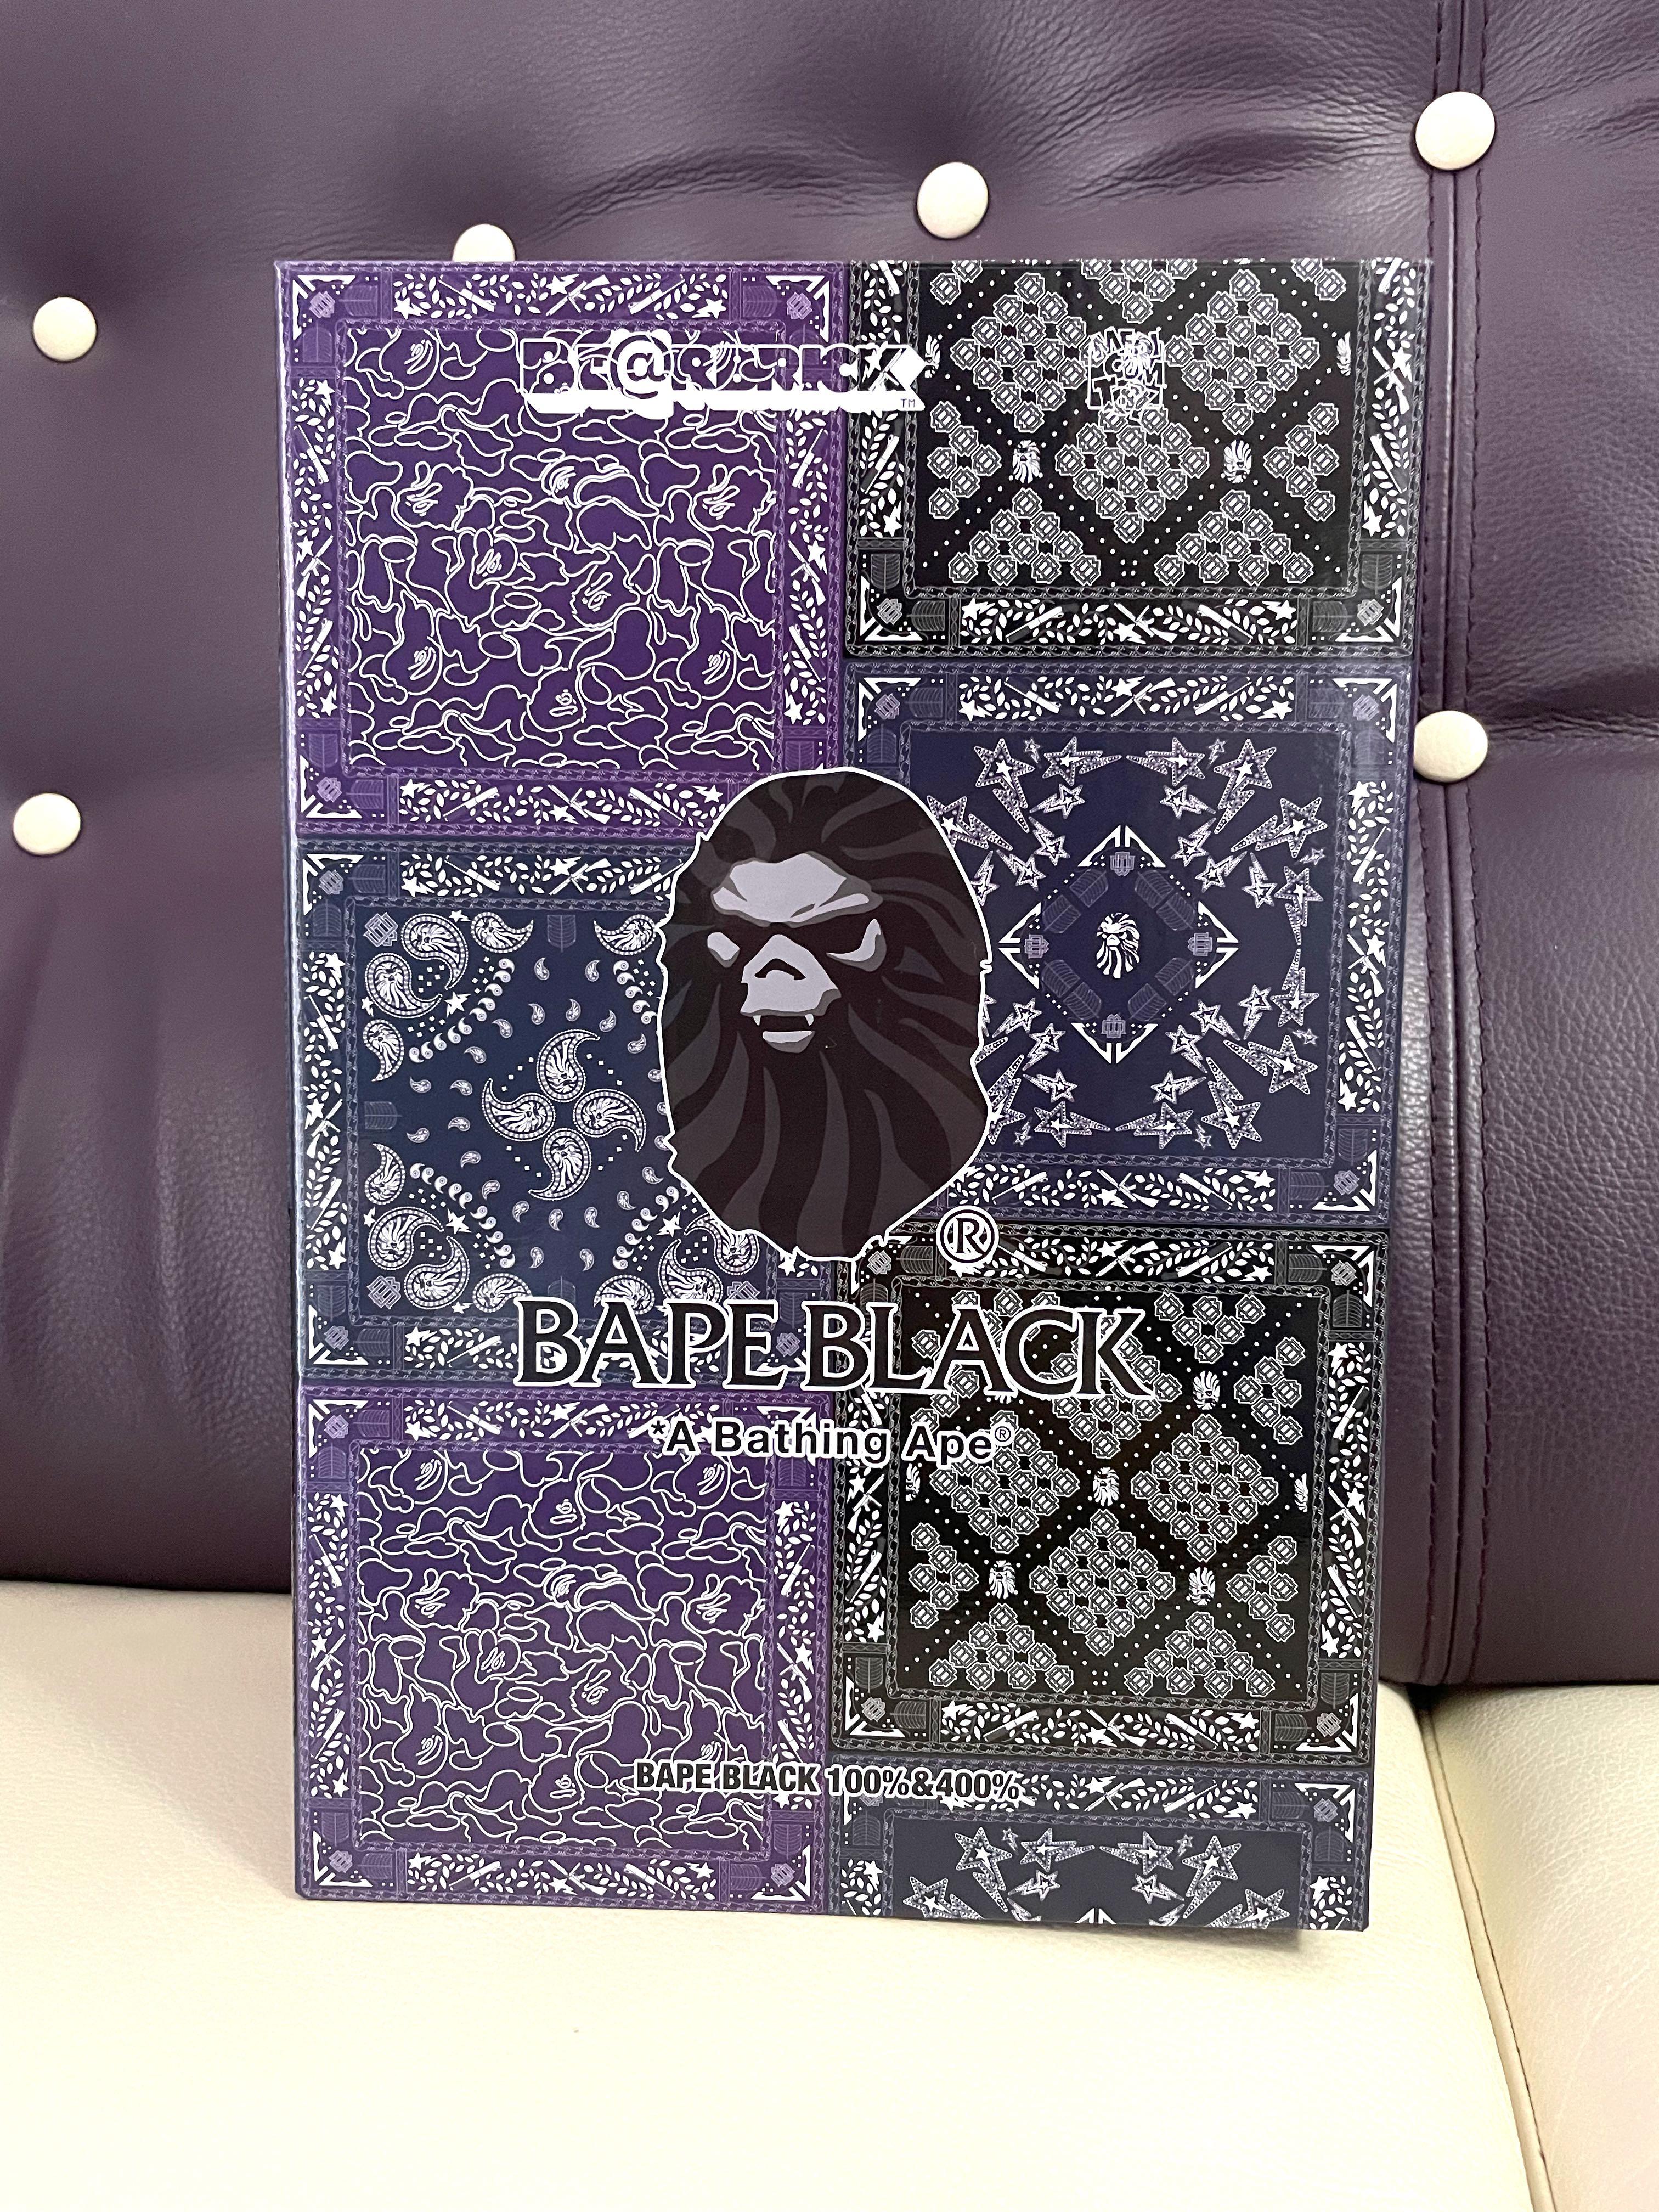 Bearbrick Bape Black 400% +100% bandana bathing ape, 興趣及遊戲